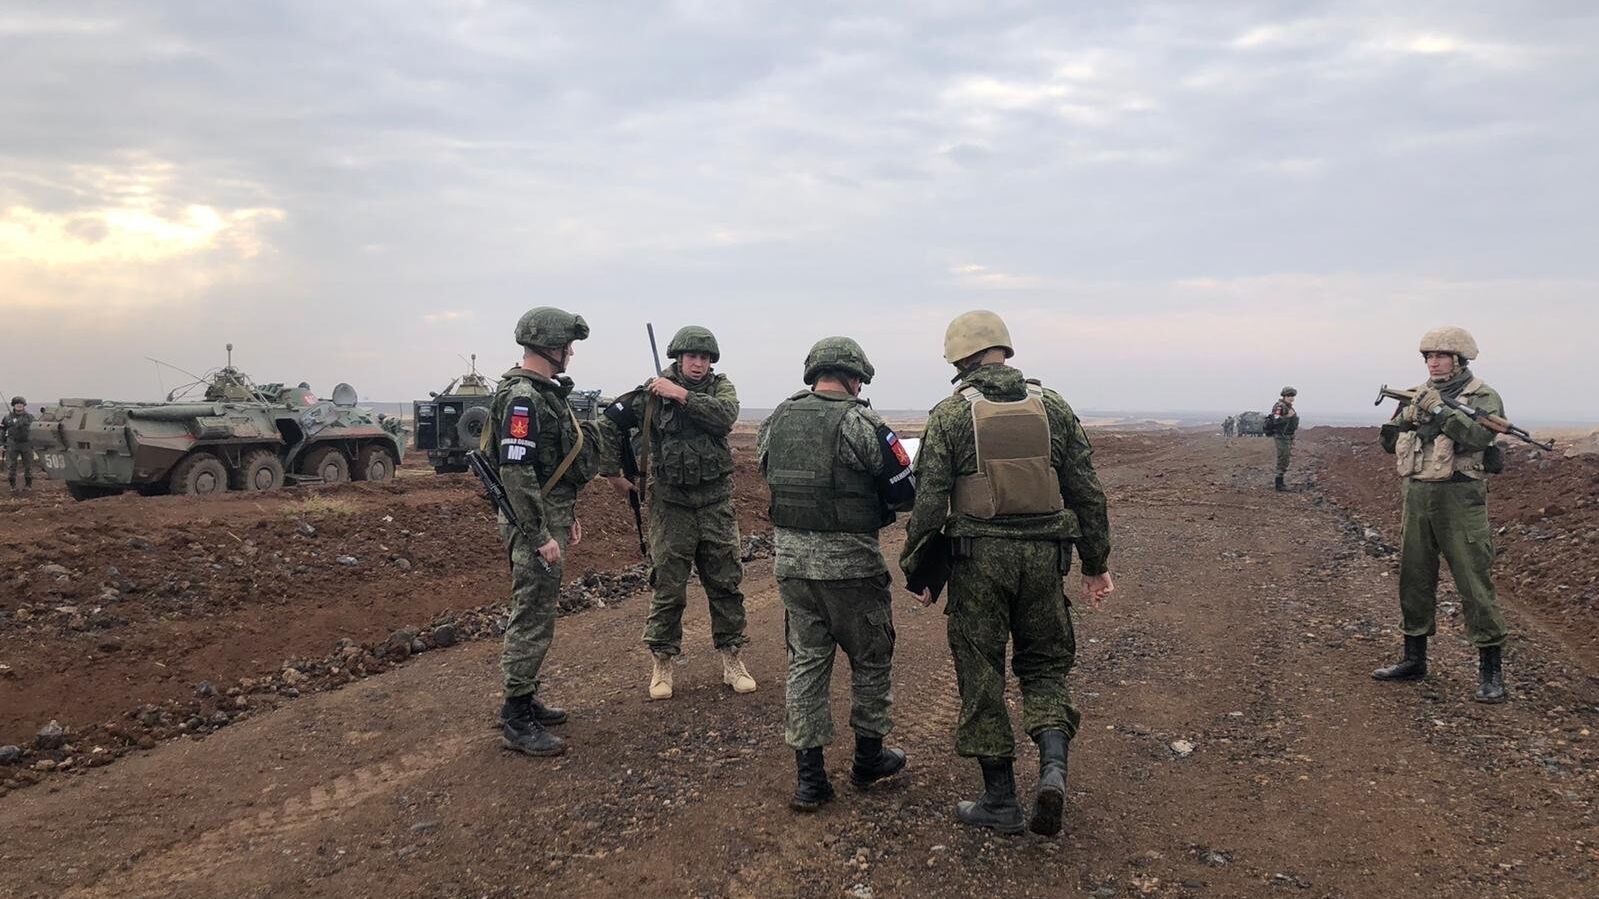 叙利亚新闻 11 四月 06.00: США перебрасывают технику в Сирию, совместное патрулирование Турции и РФ в Хасаке